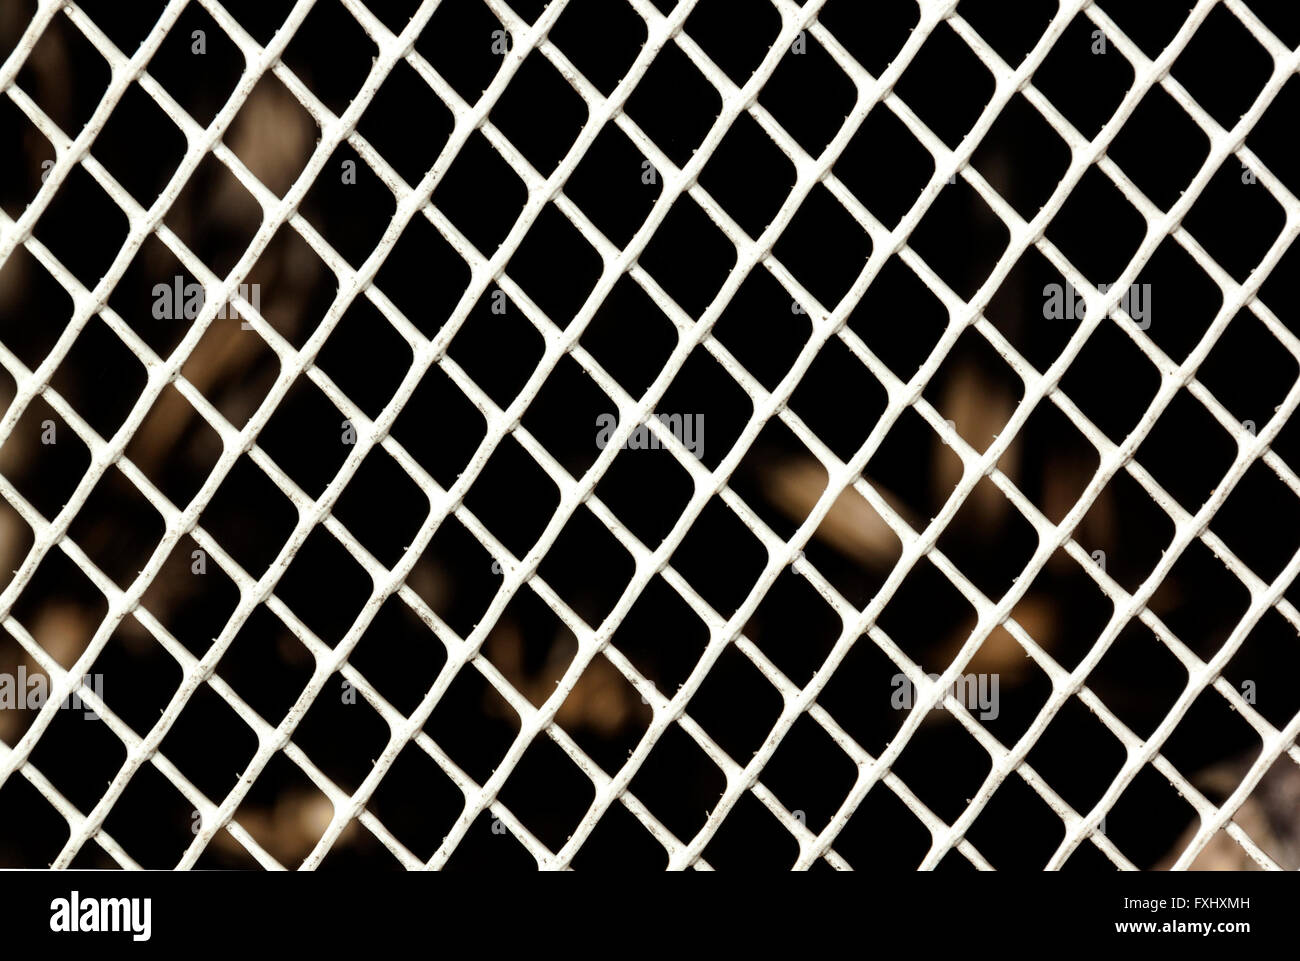 White plastic mesh in diamond grid pattern background Stock Photo - Alamy